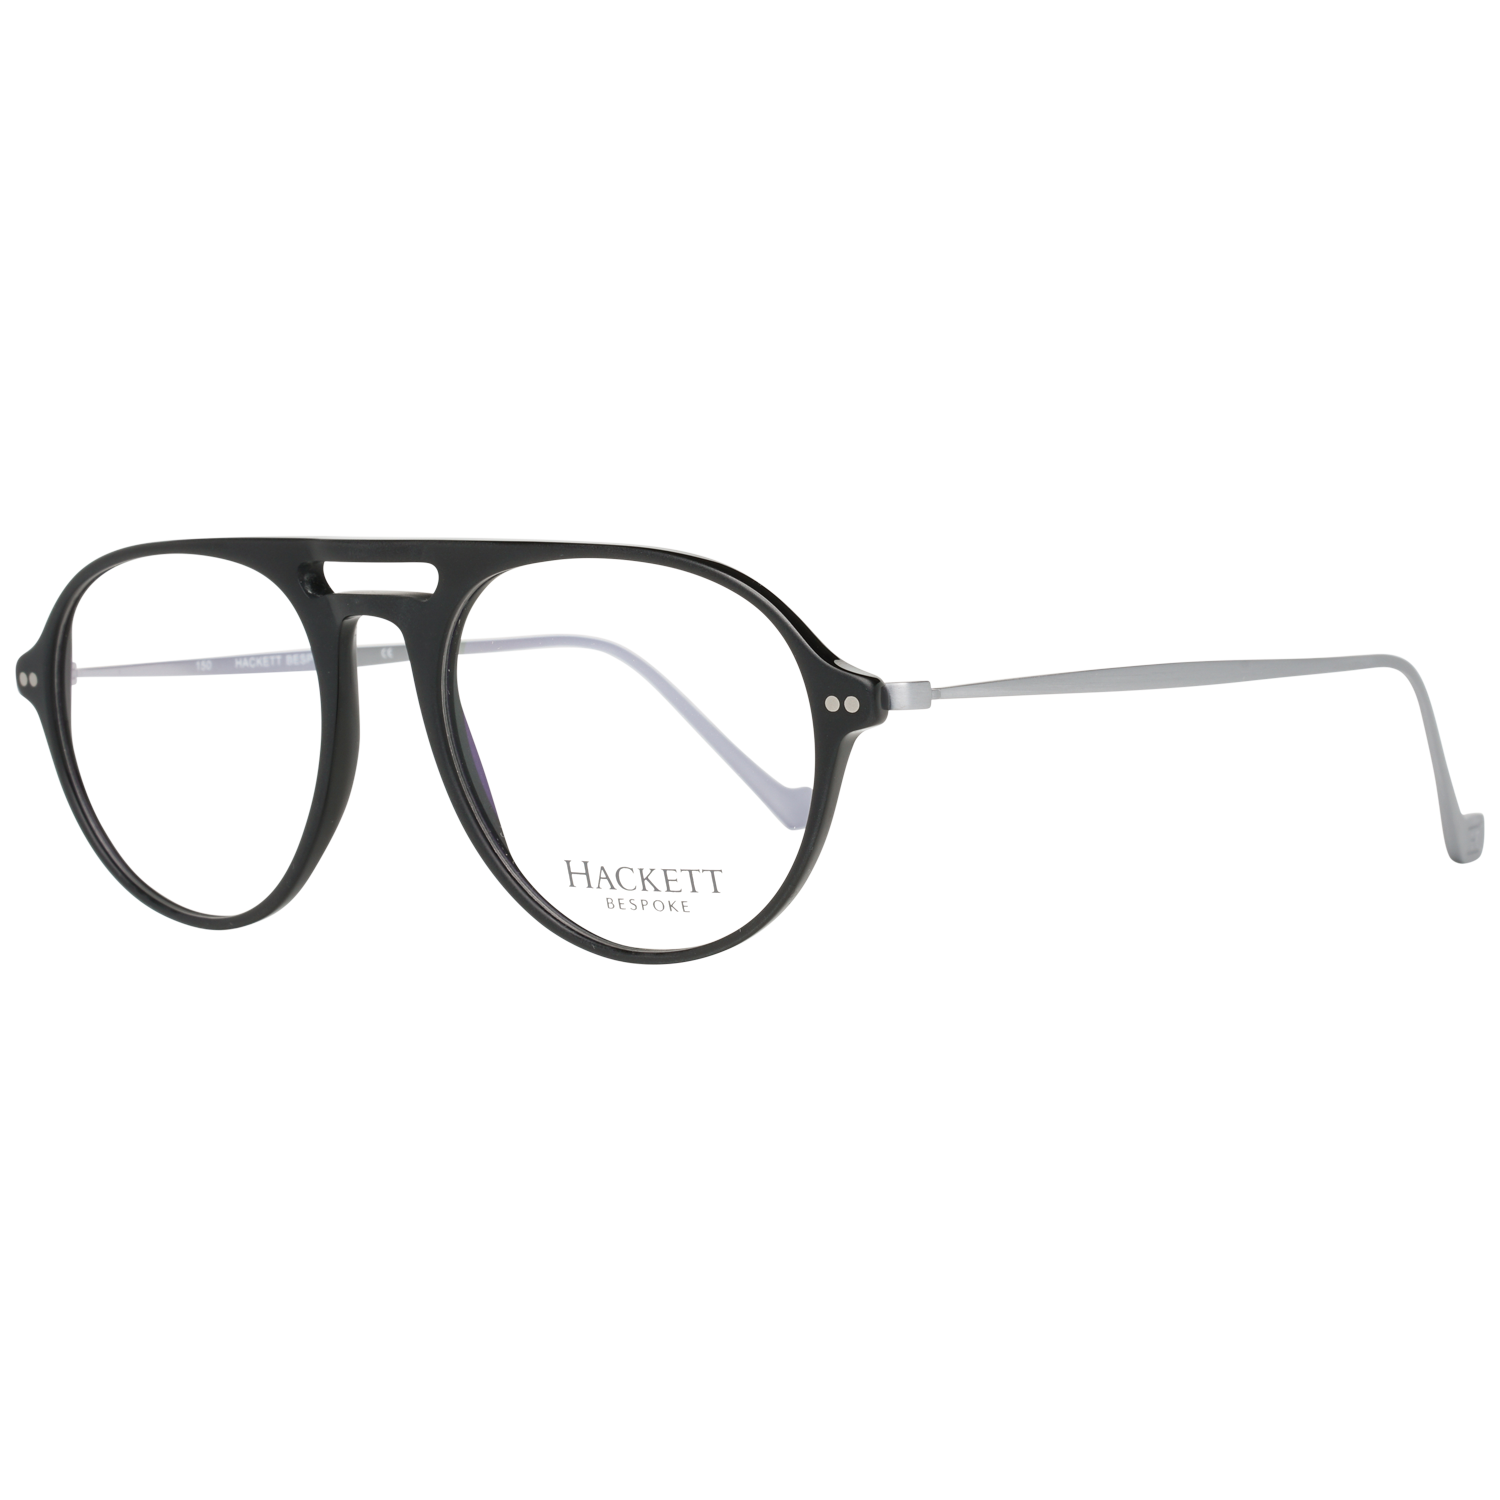 Hackett Frames Hackett Bespoke Glasses Optical Frame HEB239 002 51 Eyeglasses Eyewear UK USA Australia 